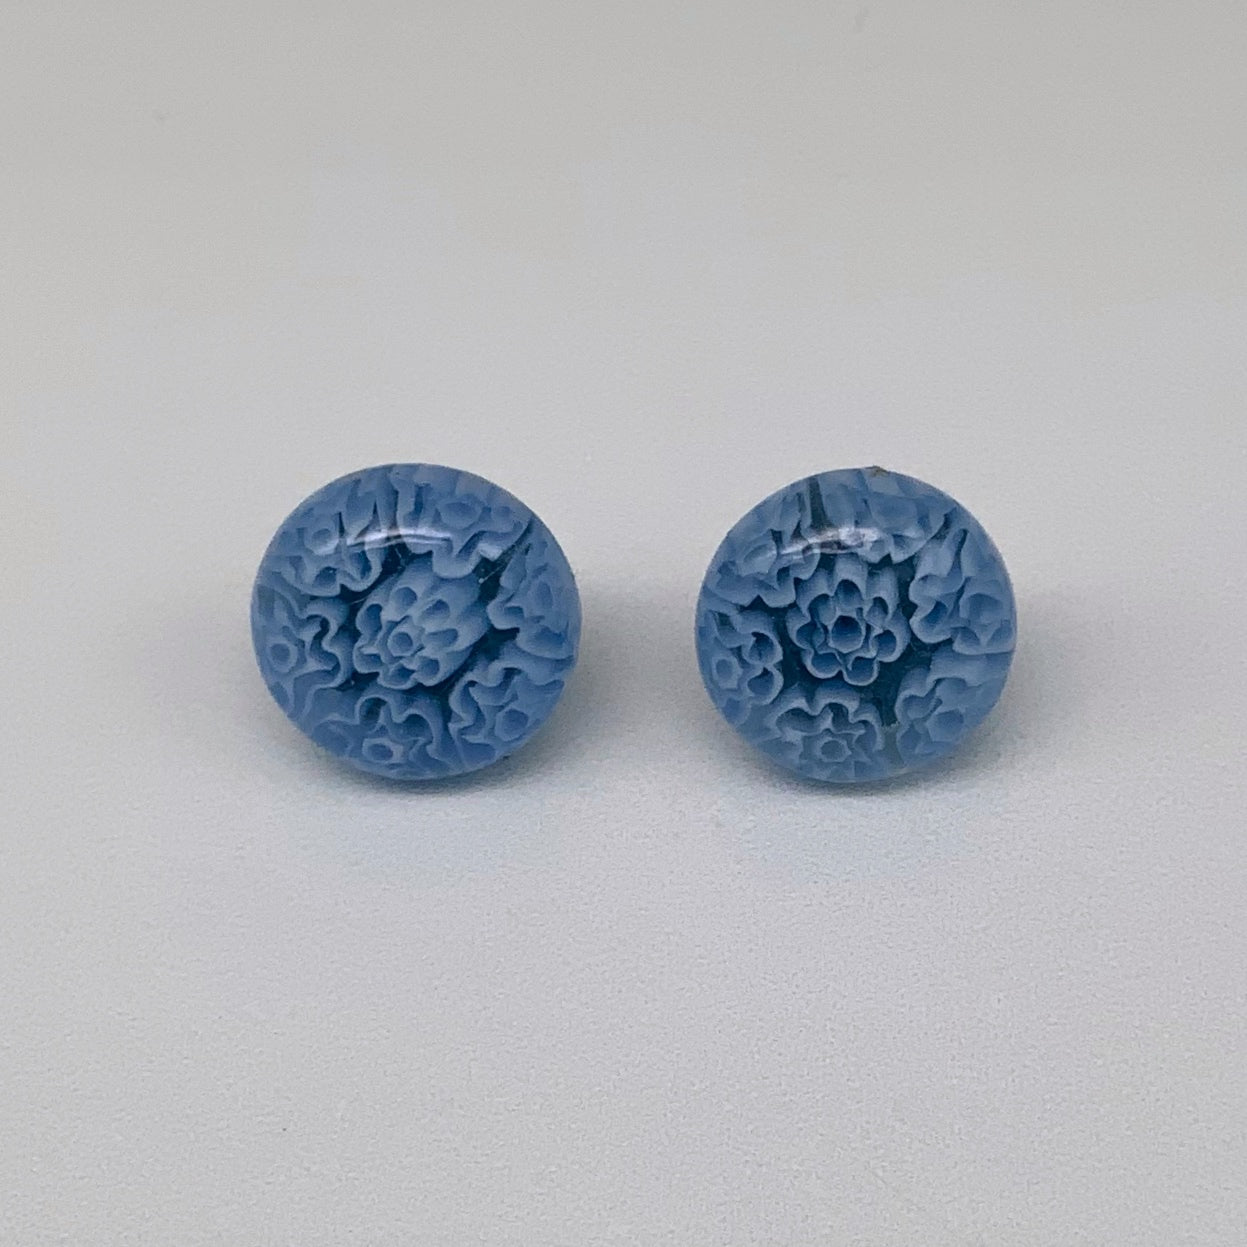 Fused periwinkle glass fleurette stud earrings